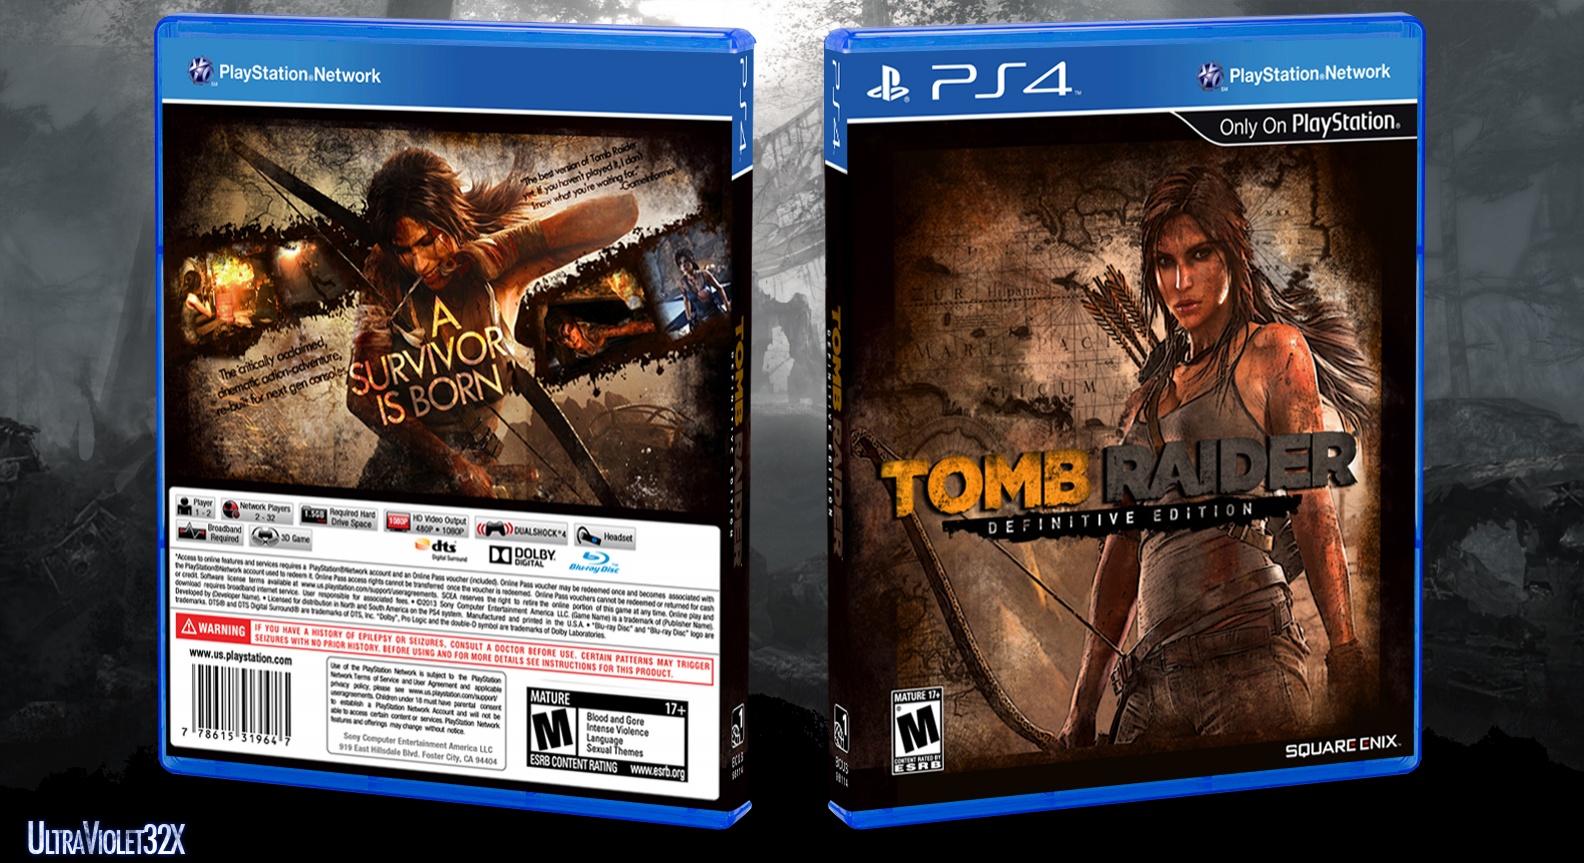 Tomb raider ps4 купить. Диск Tomb Raider Definitive Edition. Tomb Raider ps4. Томб Райдер диск ПС 4.